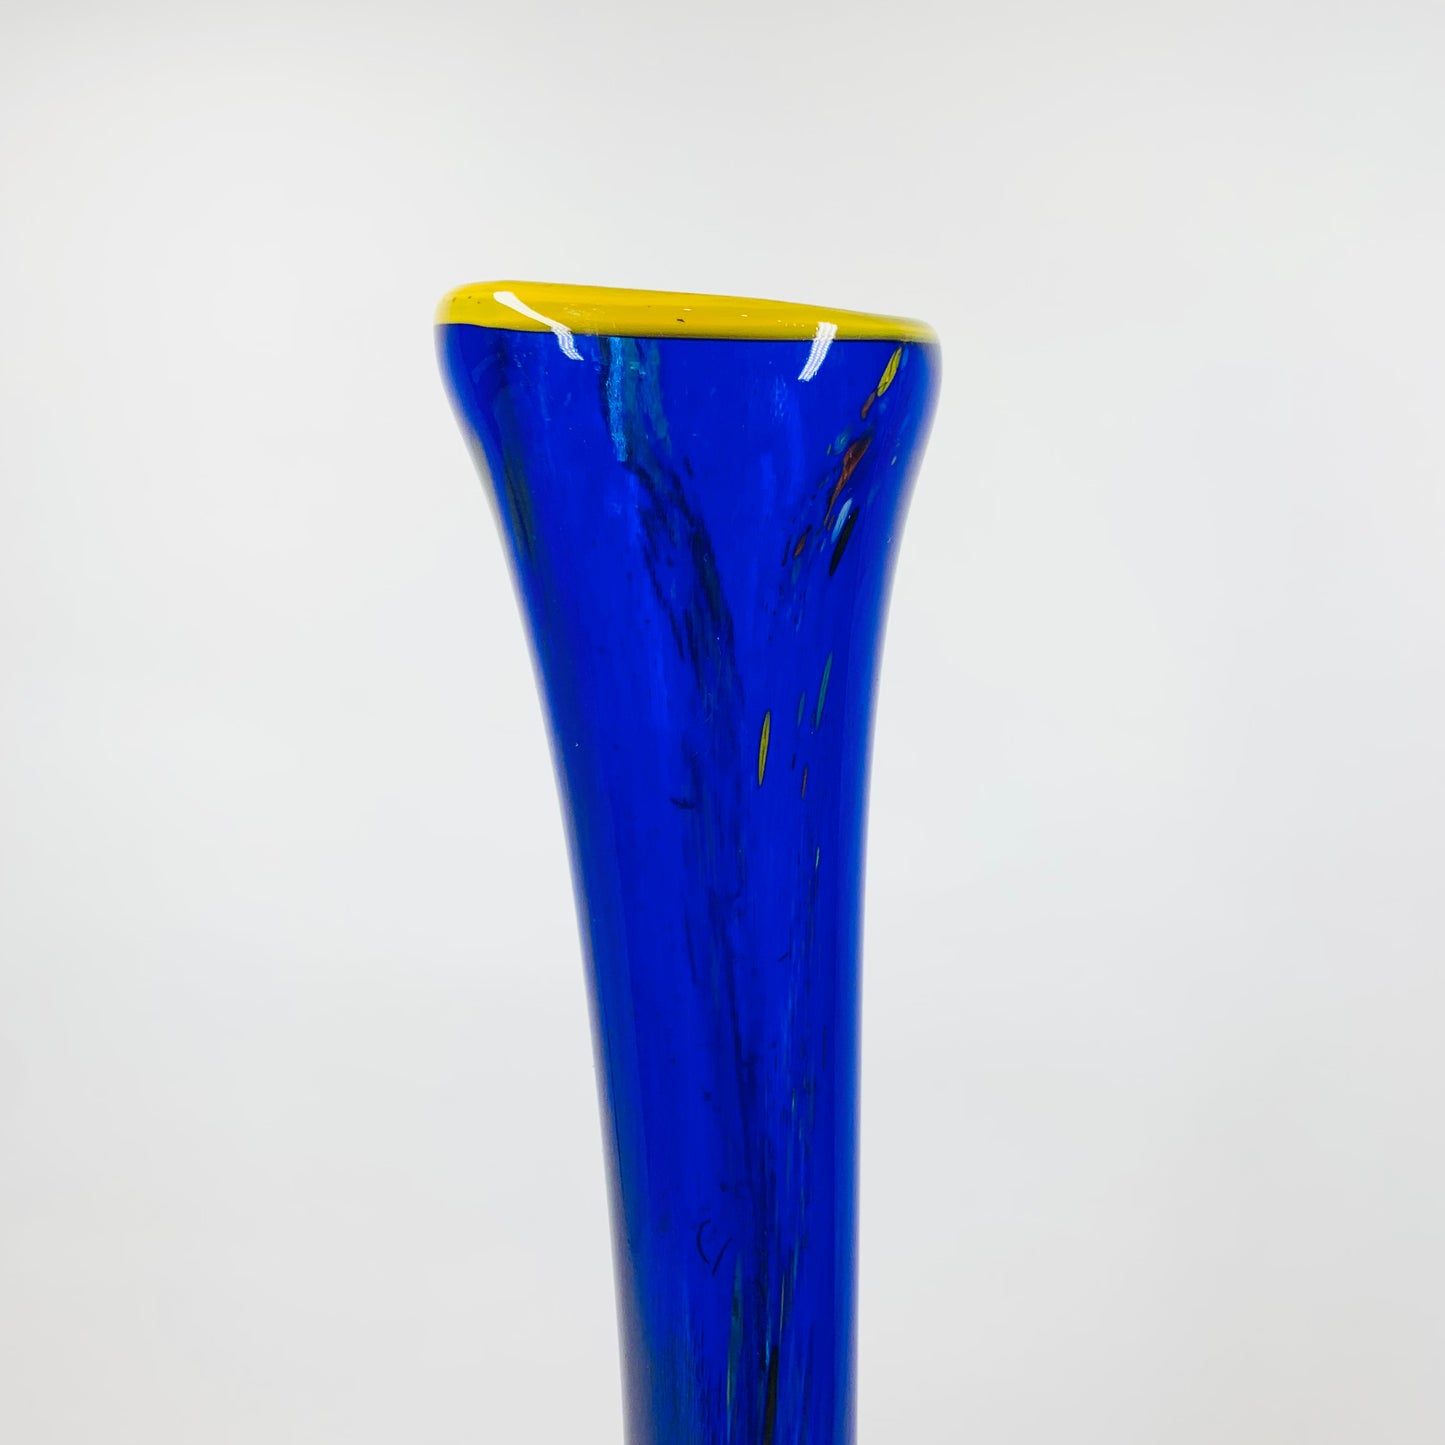 Vintage mouth blown art glass Outback series vase by Australian artist Eamonn Vereker